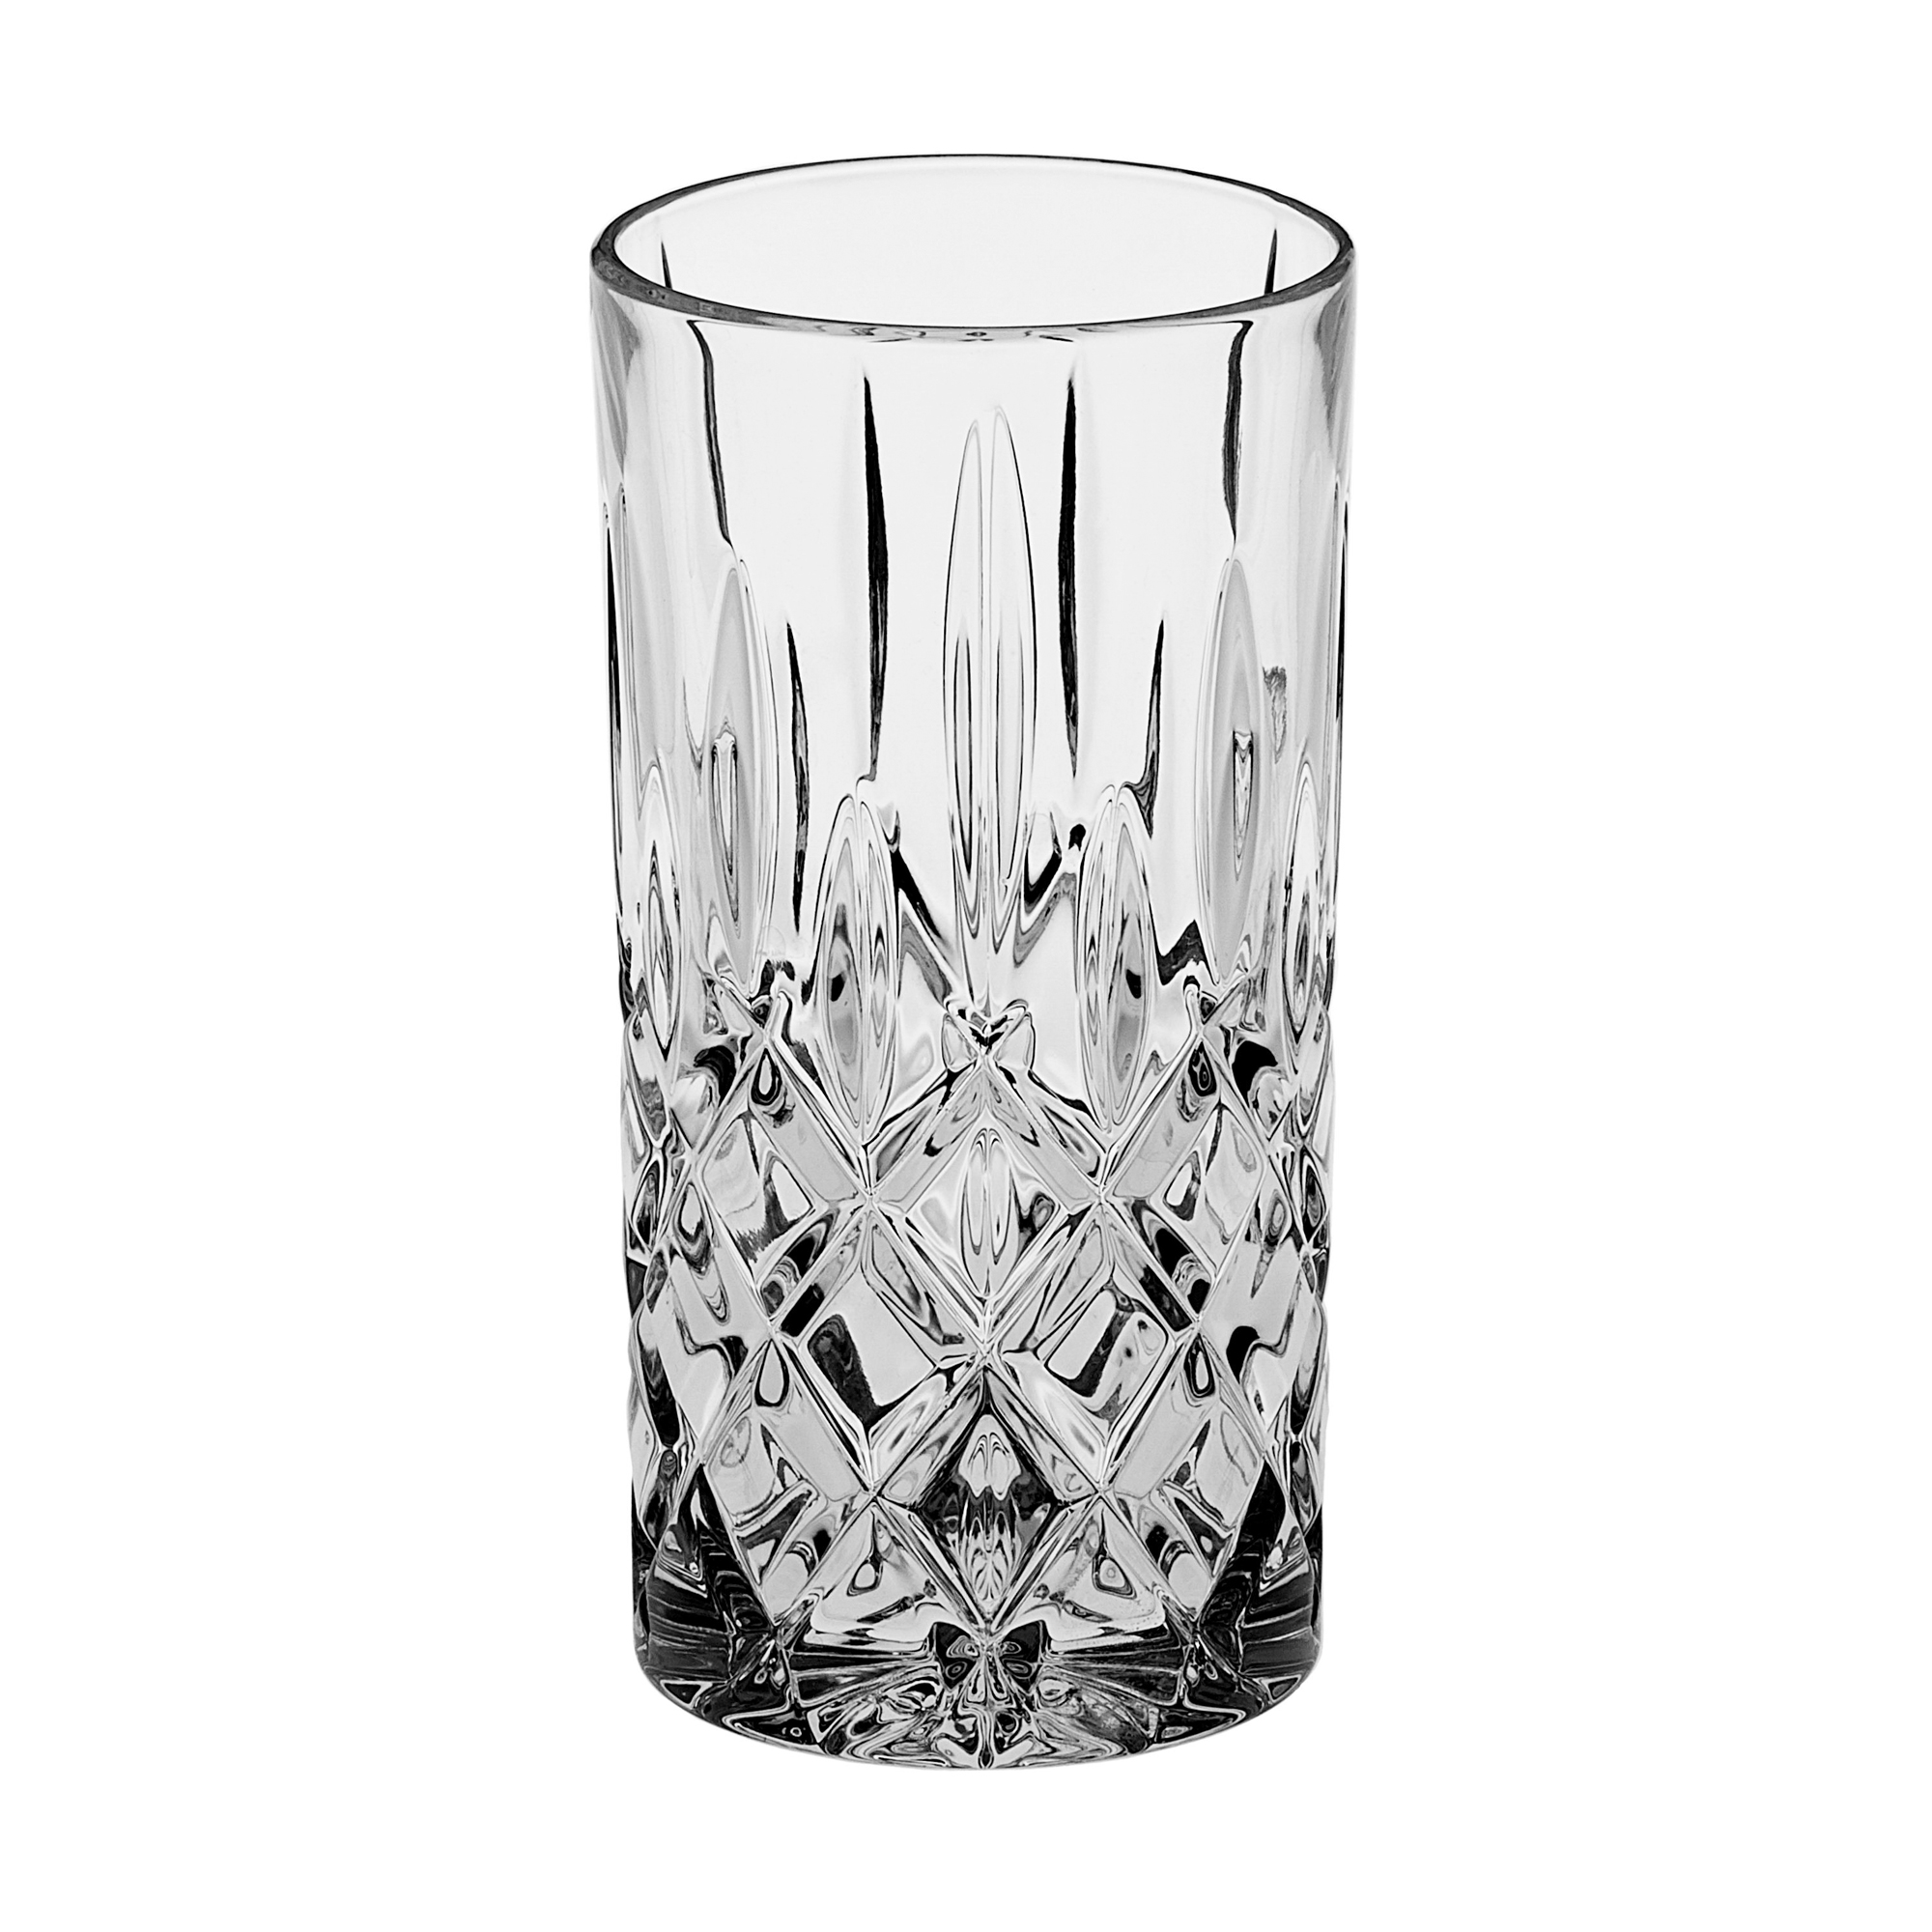 Набор стаканов Crystal bohemia as sheffield 6х350мл (990/21101/0/52820/380-609) набор стаканов для воды elise 350мл 6шт crystal bohemia 990 22500 0 64300 350 609